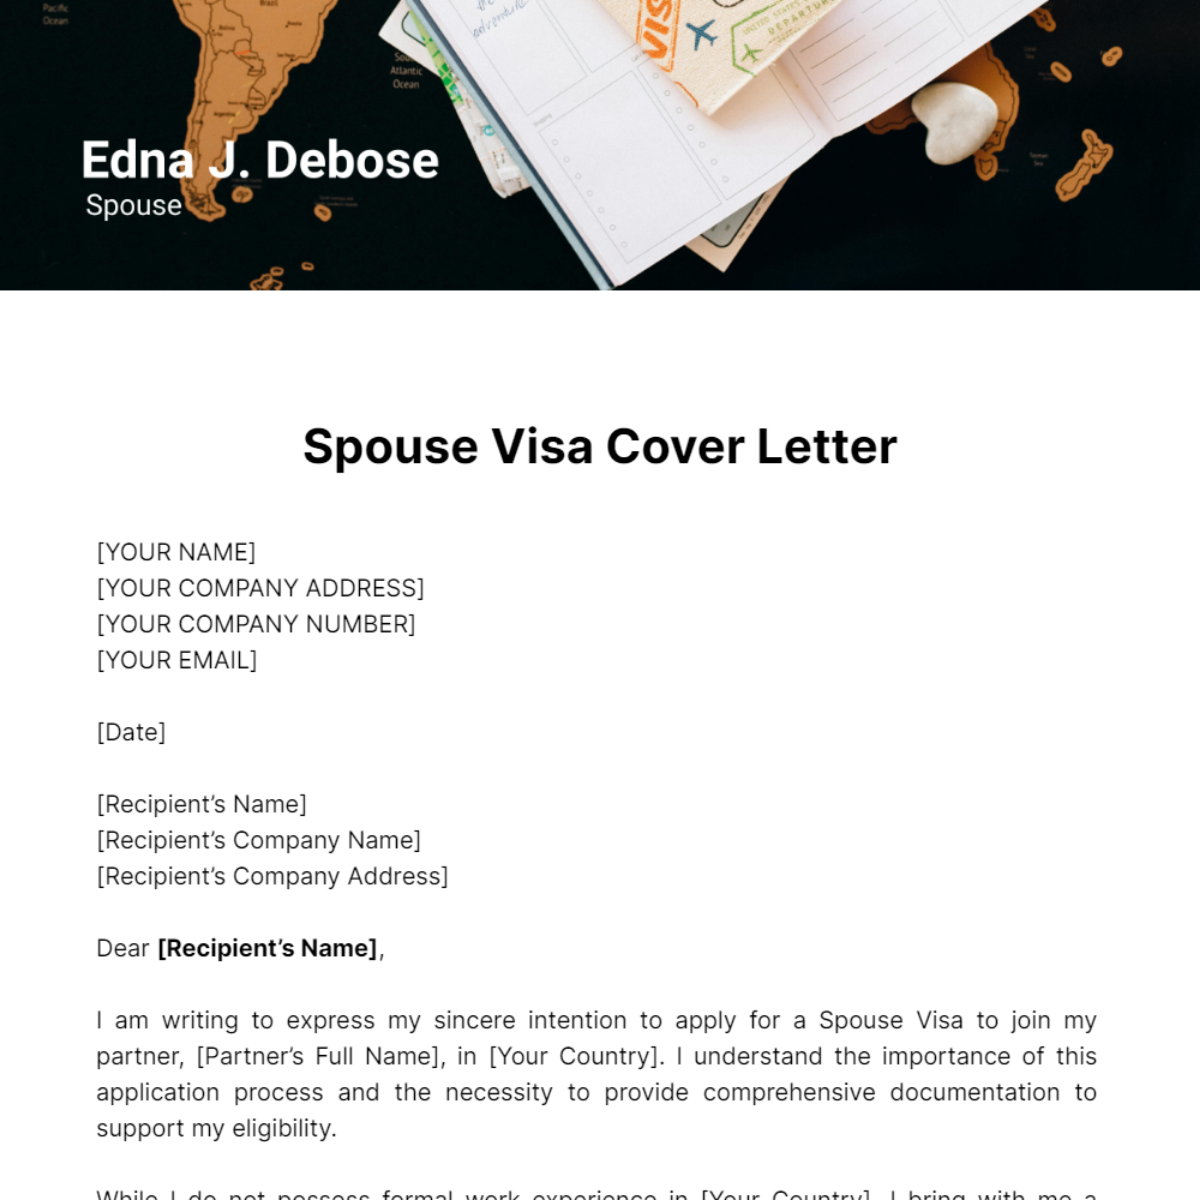 Spouse Visa Cover Letter Template